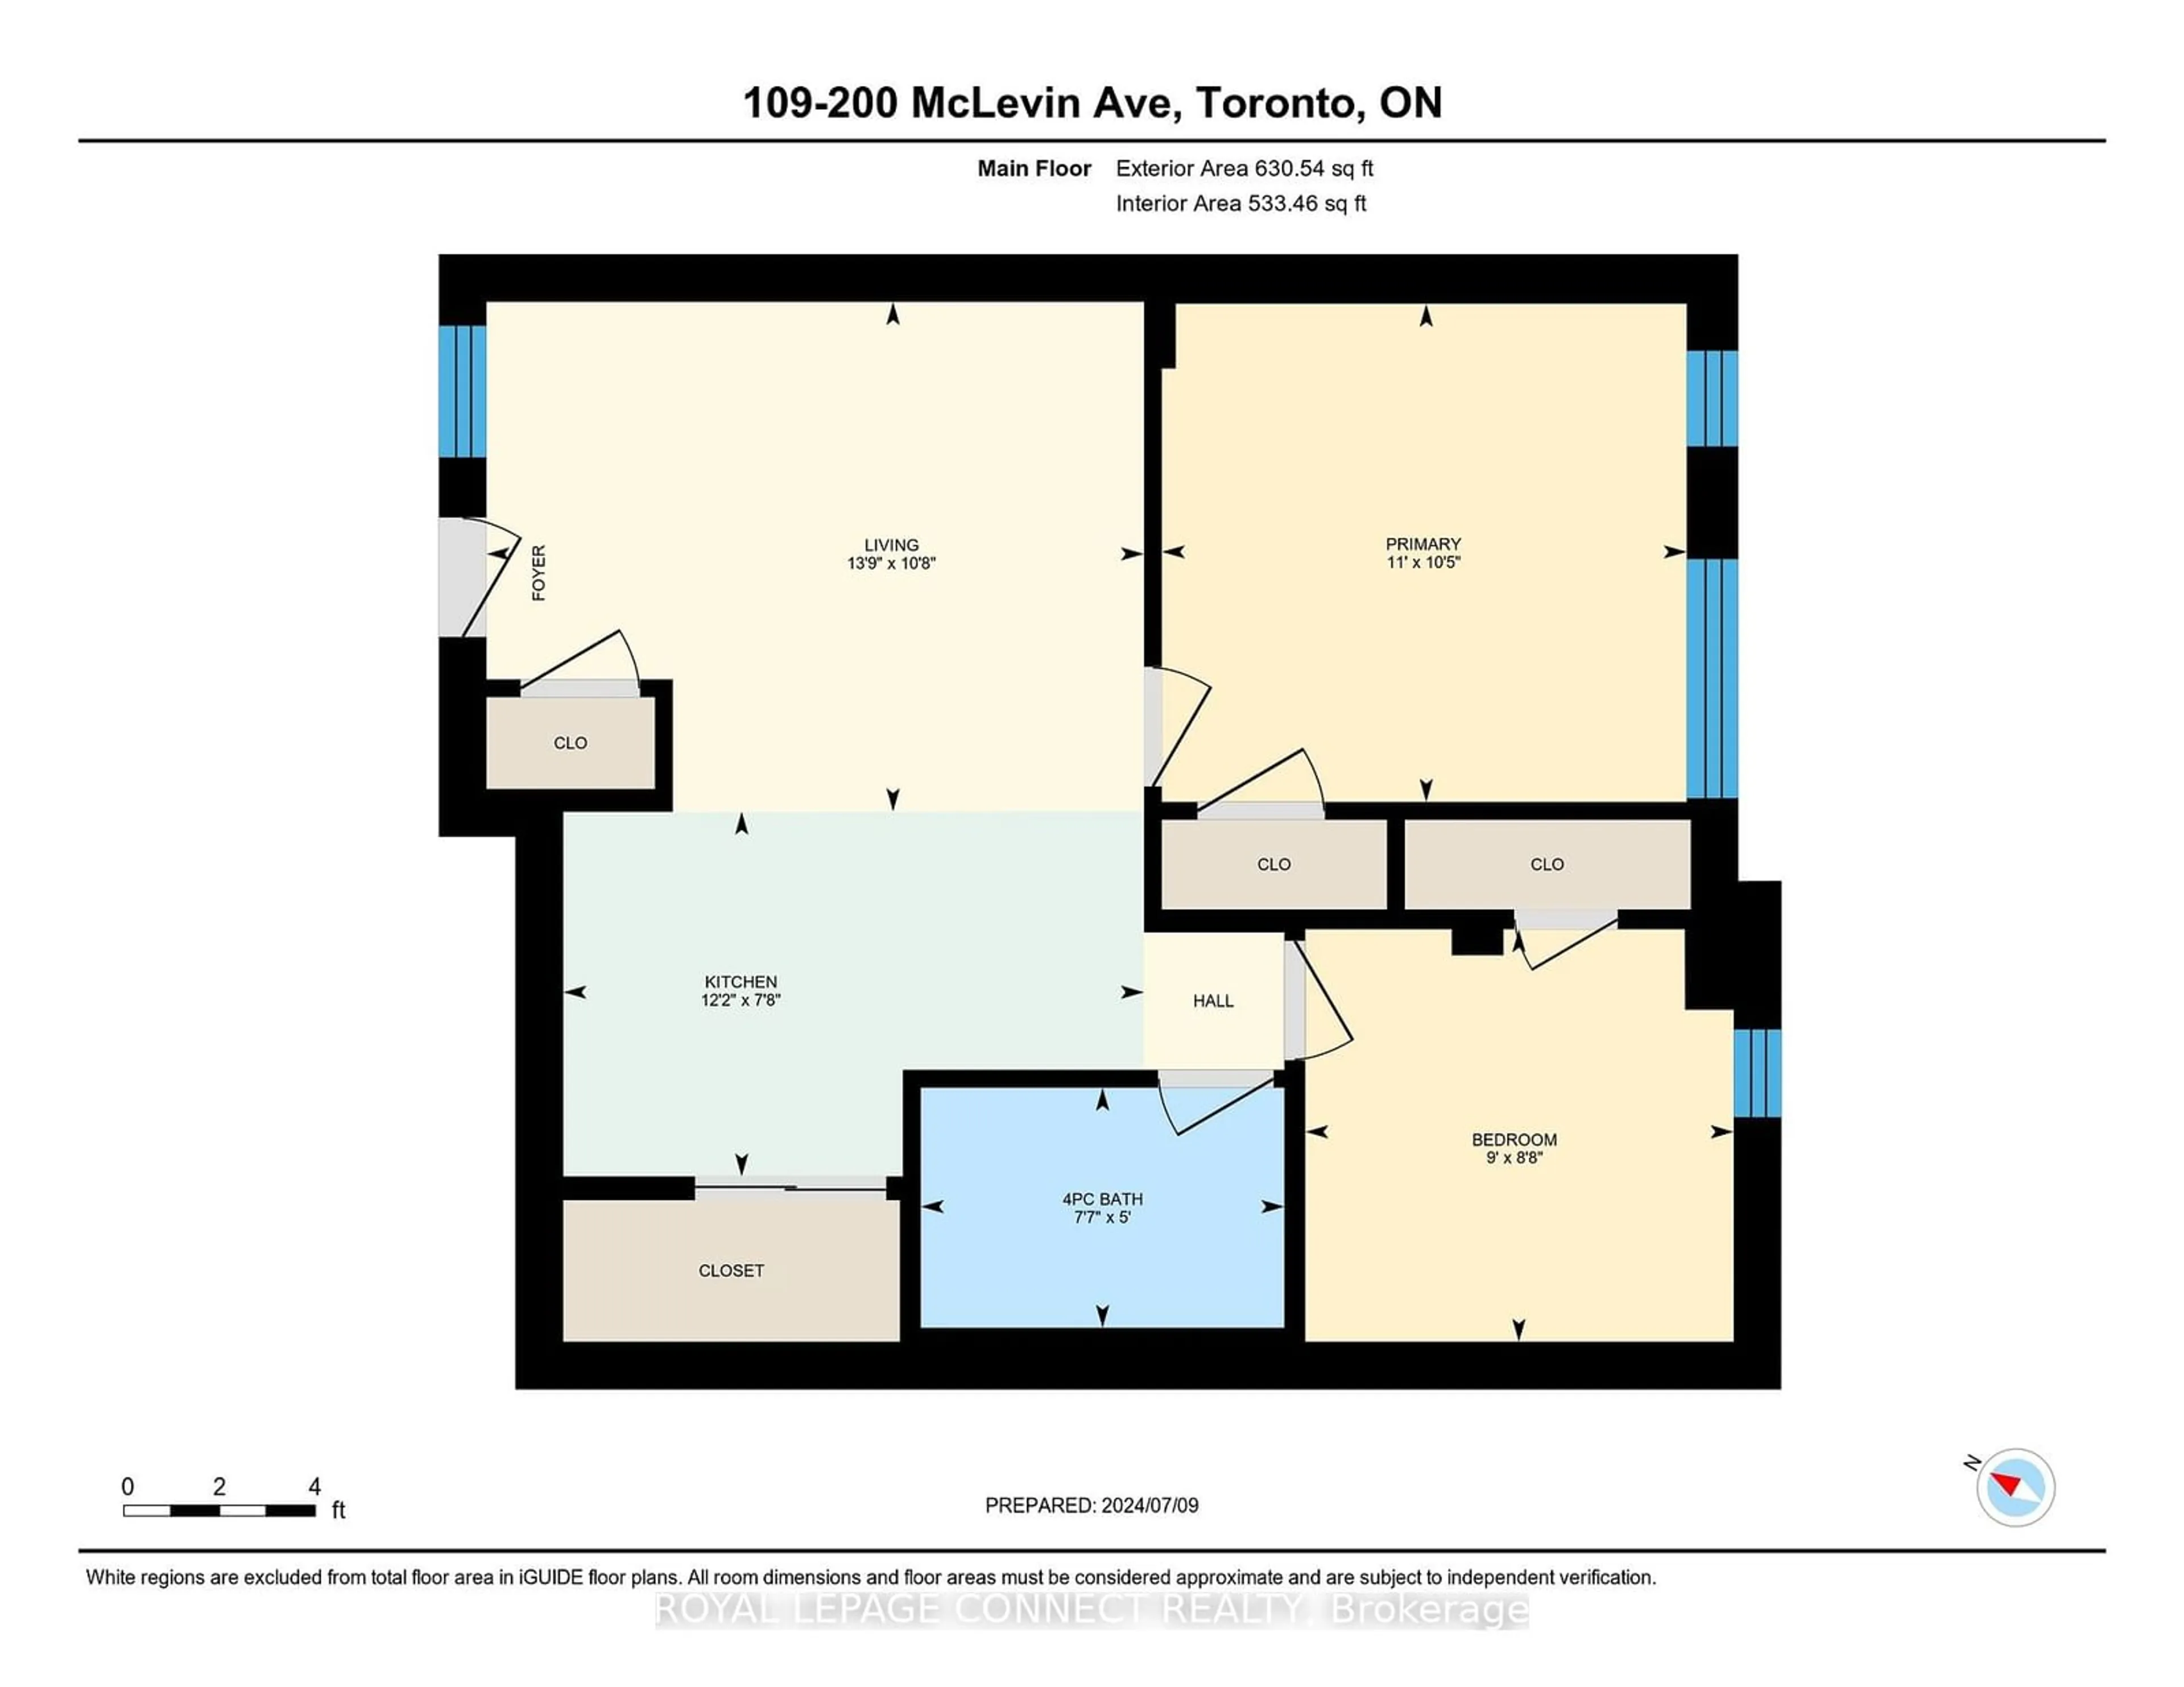 Floor plan for 200 Mclevin Ave #109, Toronto Ontario M1B 6C8